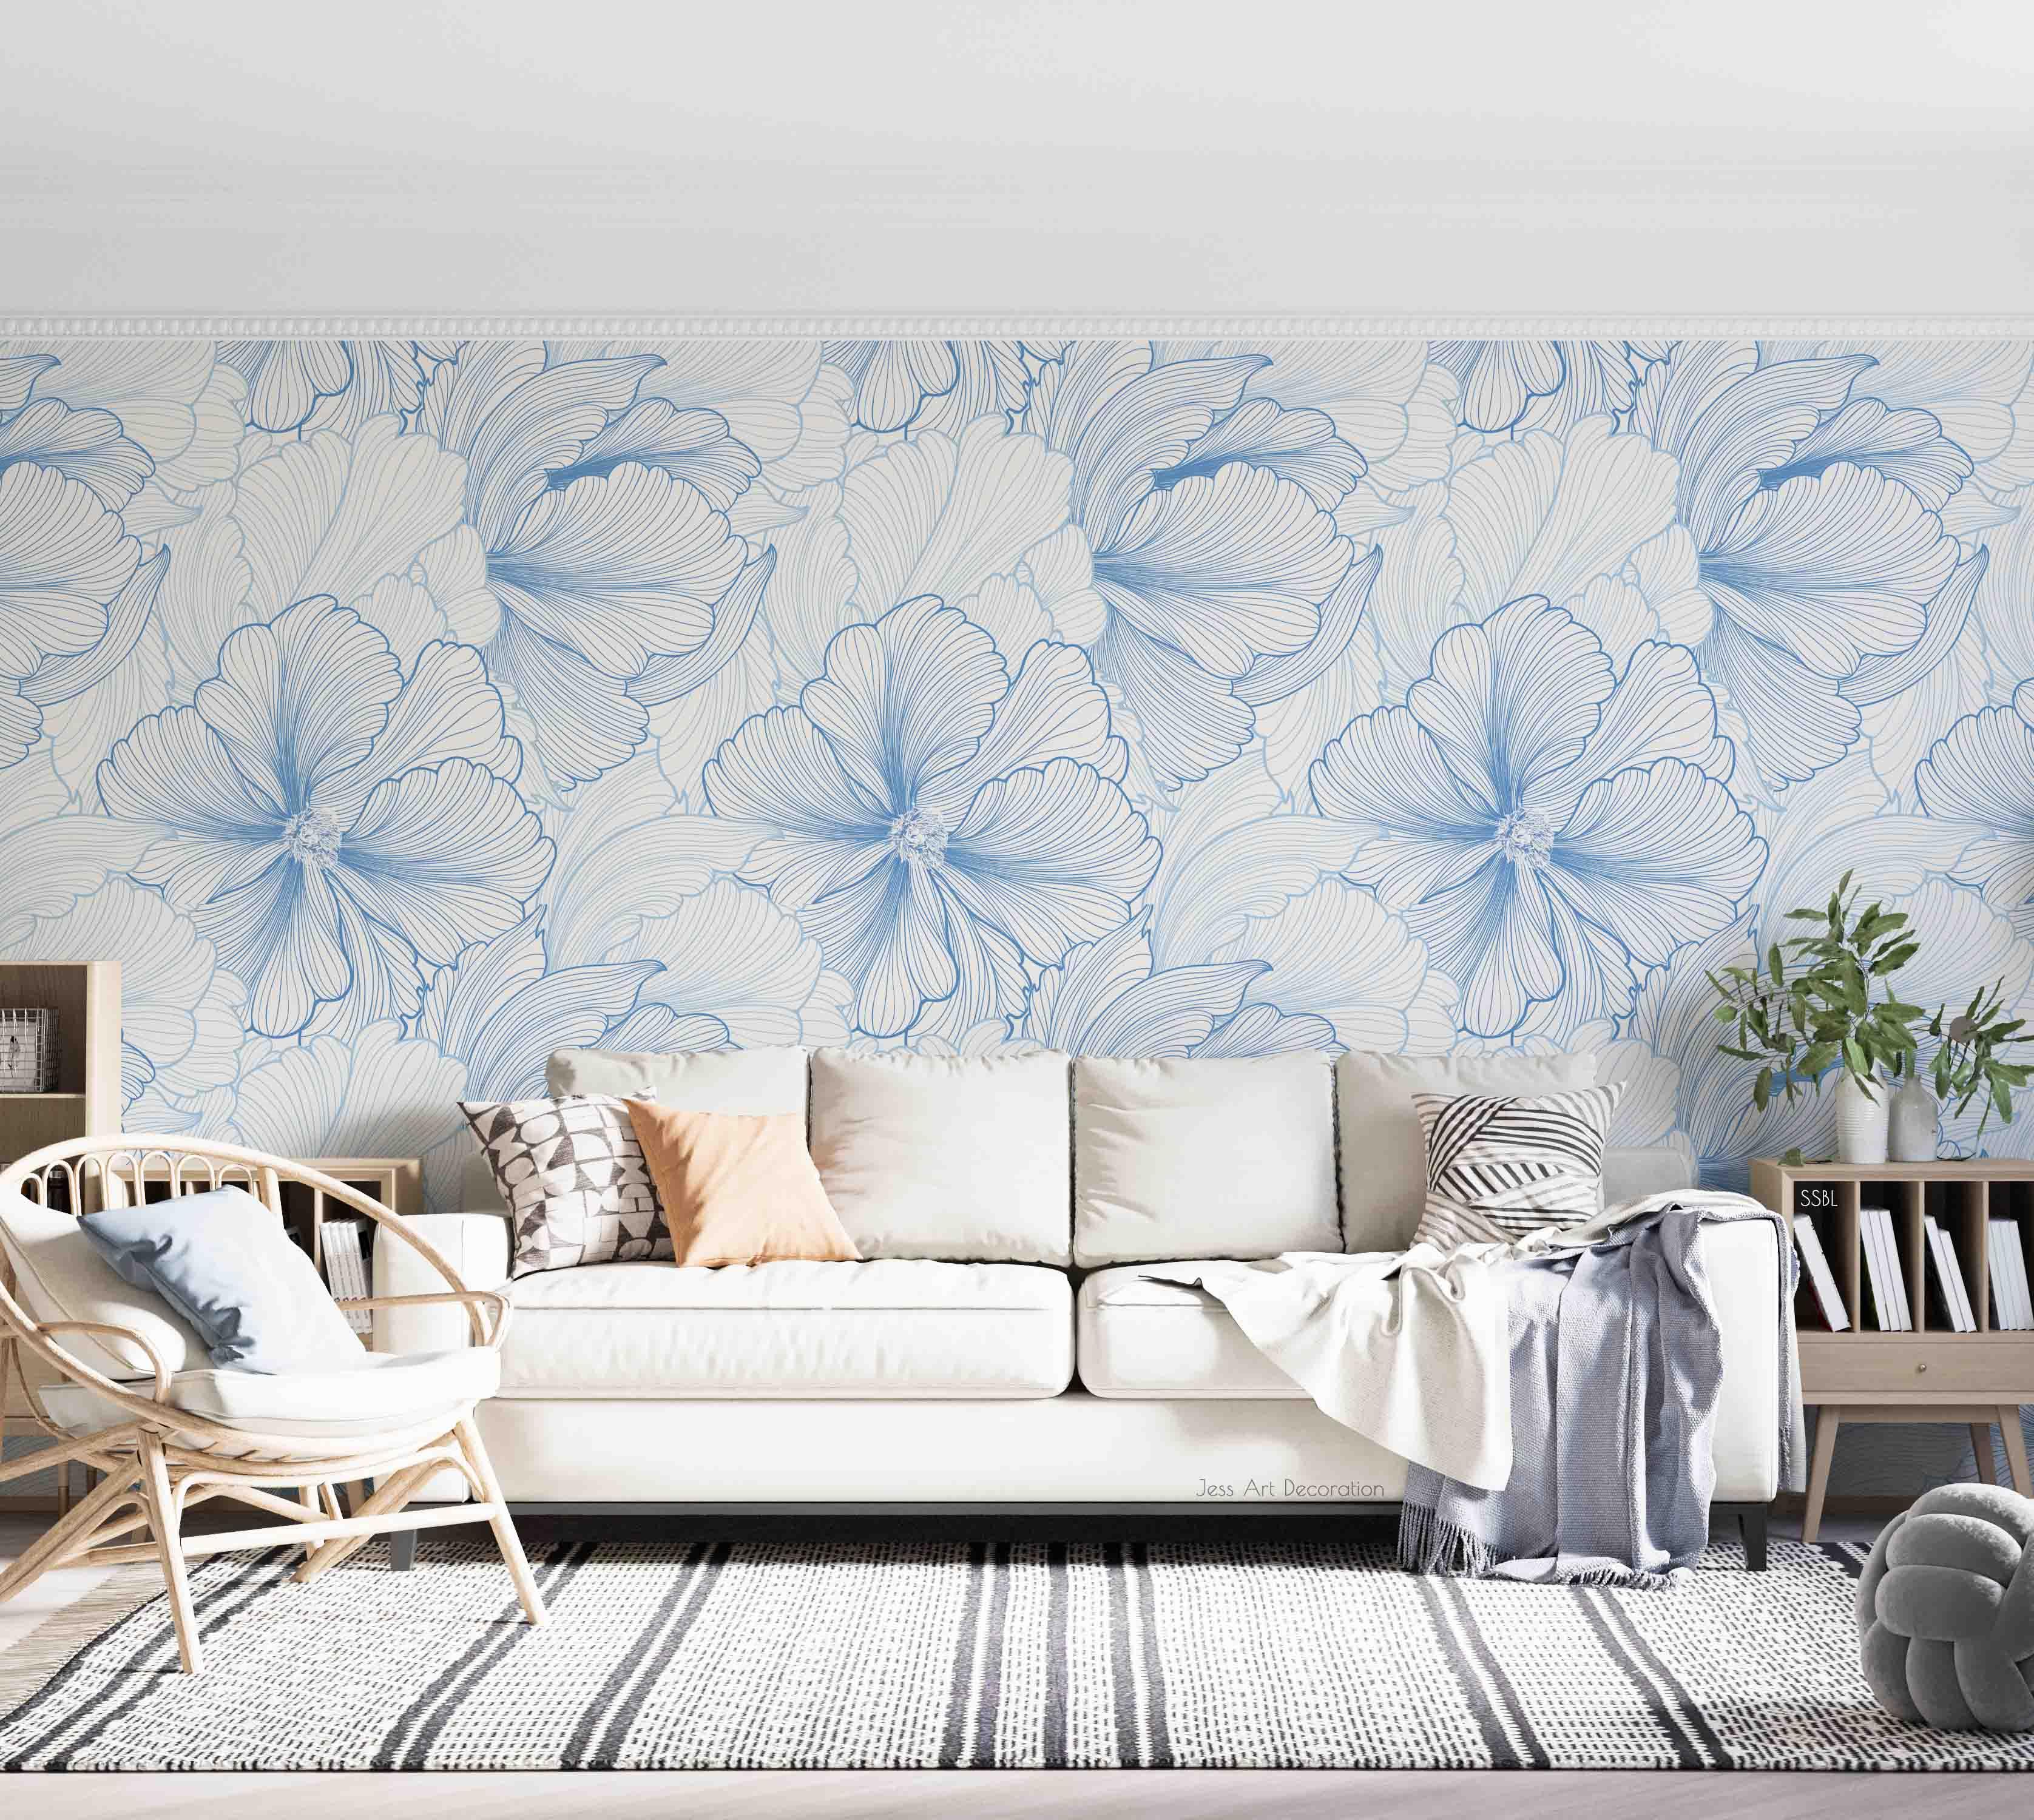 3D Vintage Blue Flower Watercolor Pattern Wall Mural Wallpaper GD 3634- Jess Art Decoration